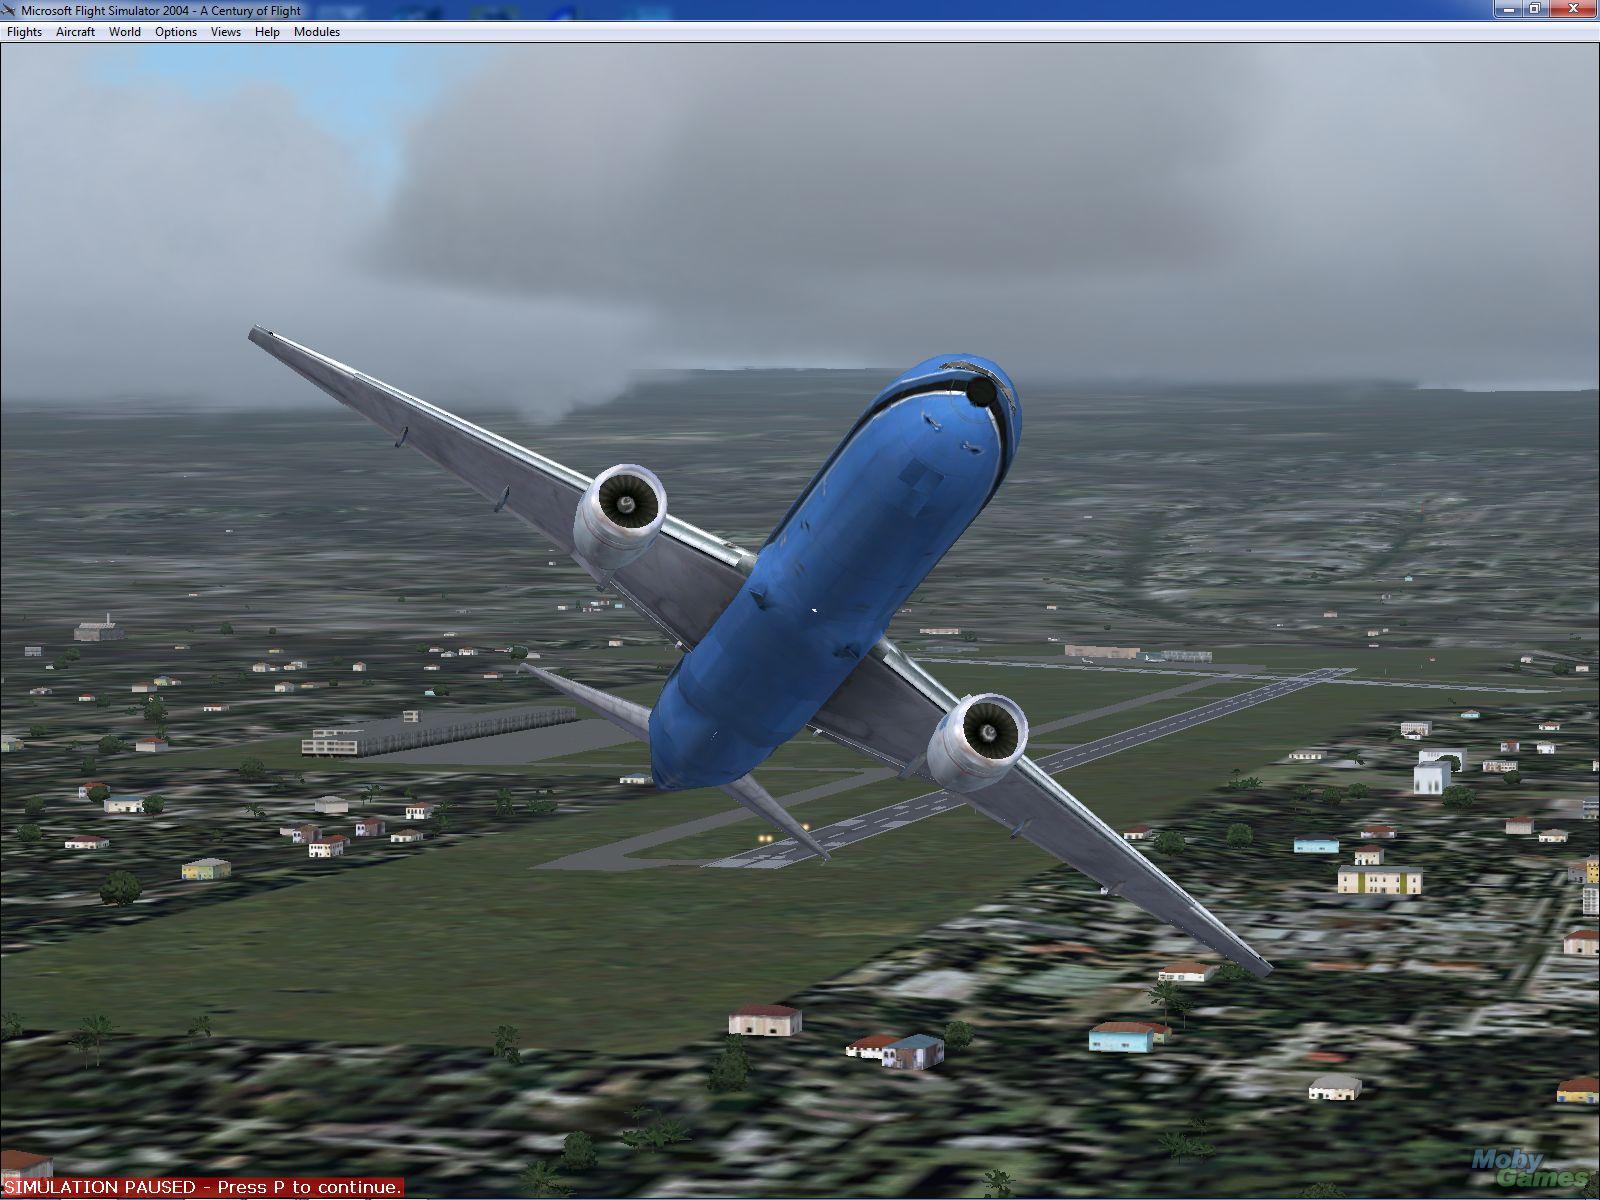 Microsoft flight simulator 2004 crack download free